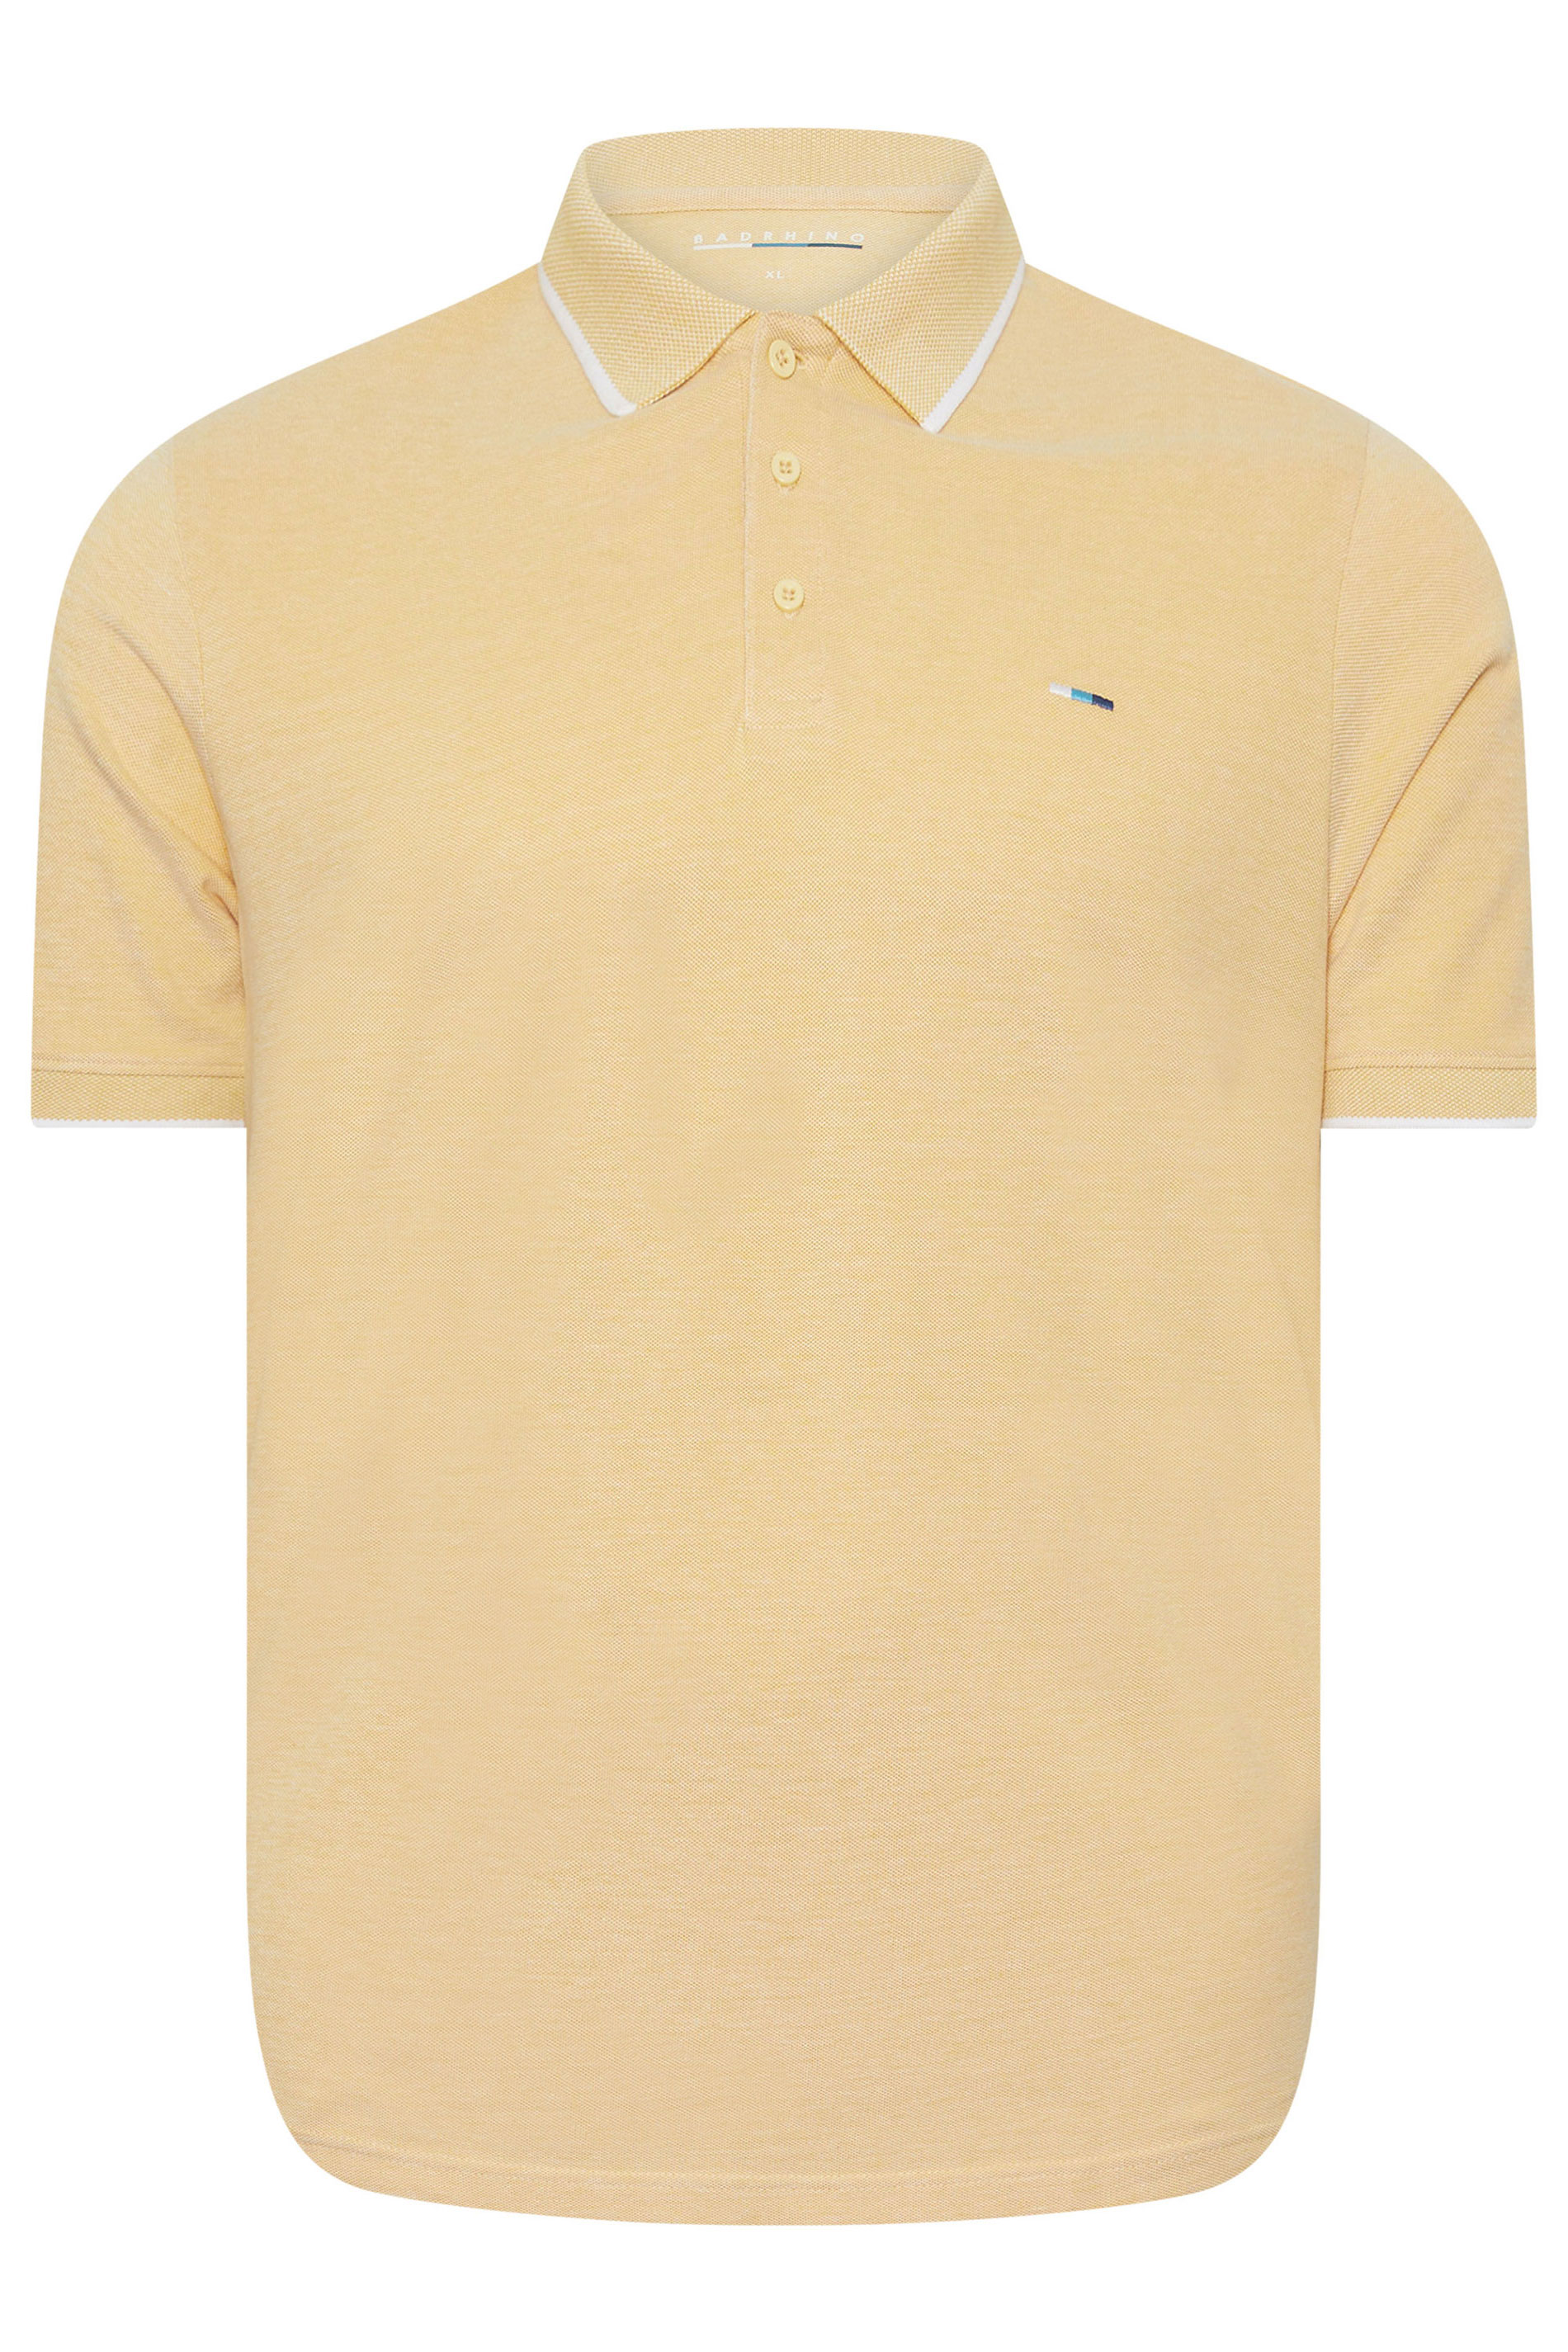 BadRhino Big & Tall Yellow Birdseye Tipped Polo Shirt | BadRhino 3